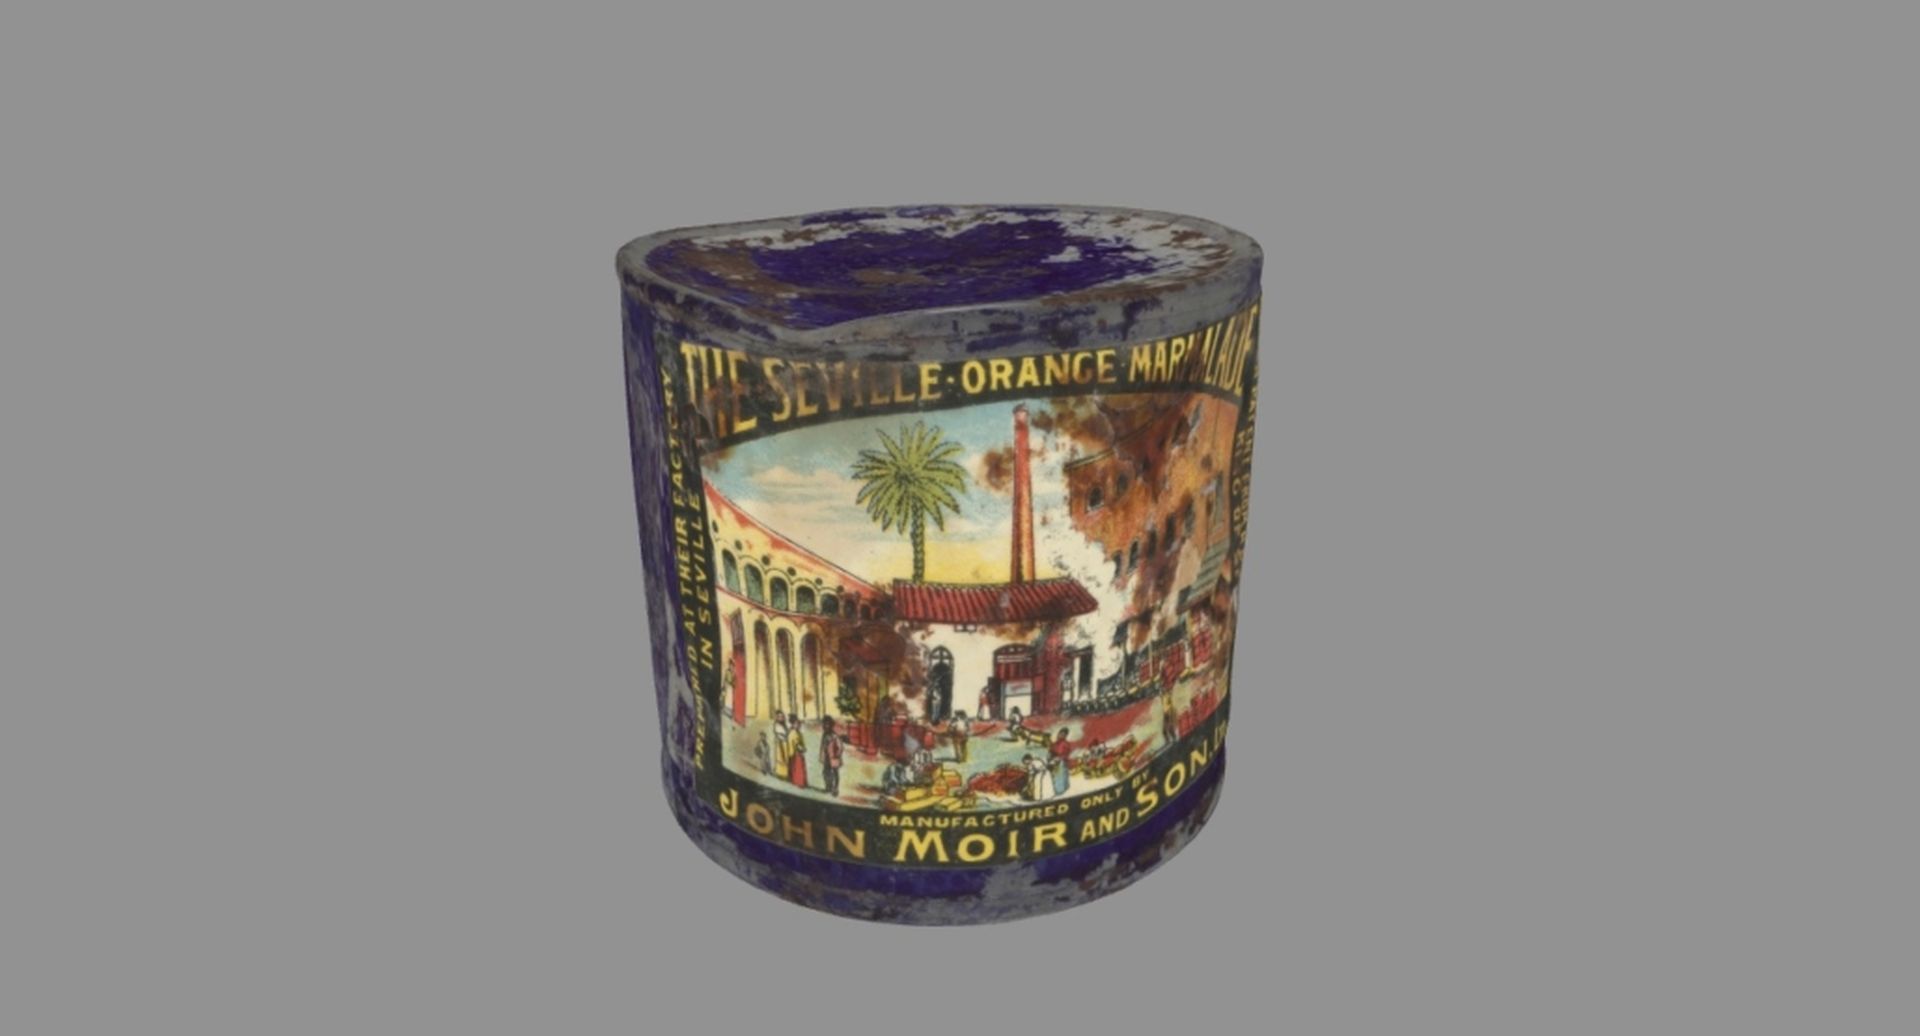 Tin of Seville Orange Marmalade